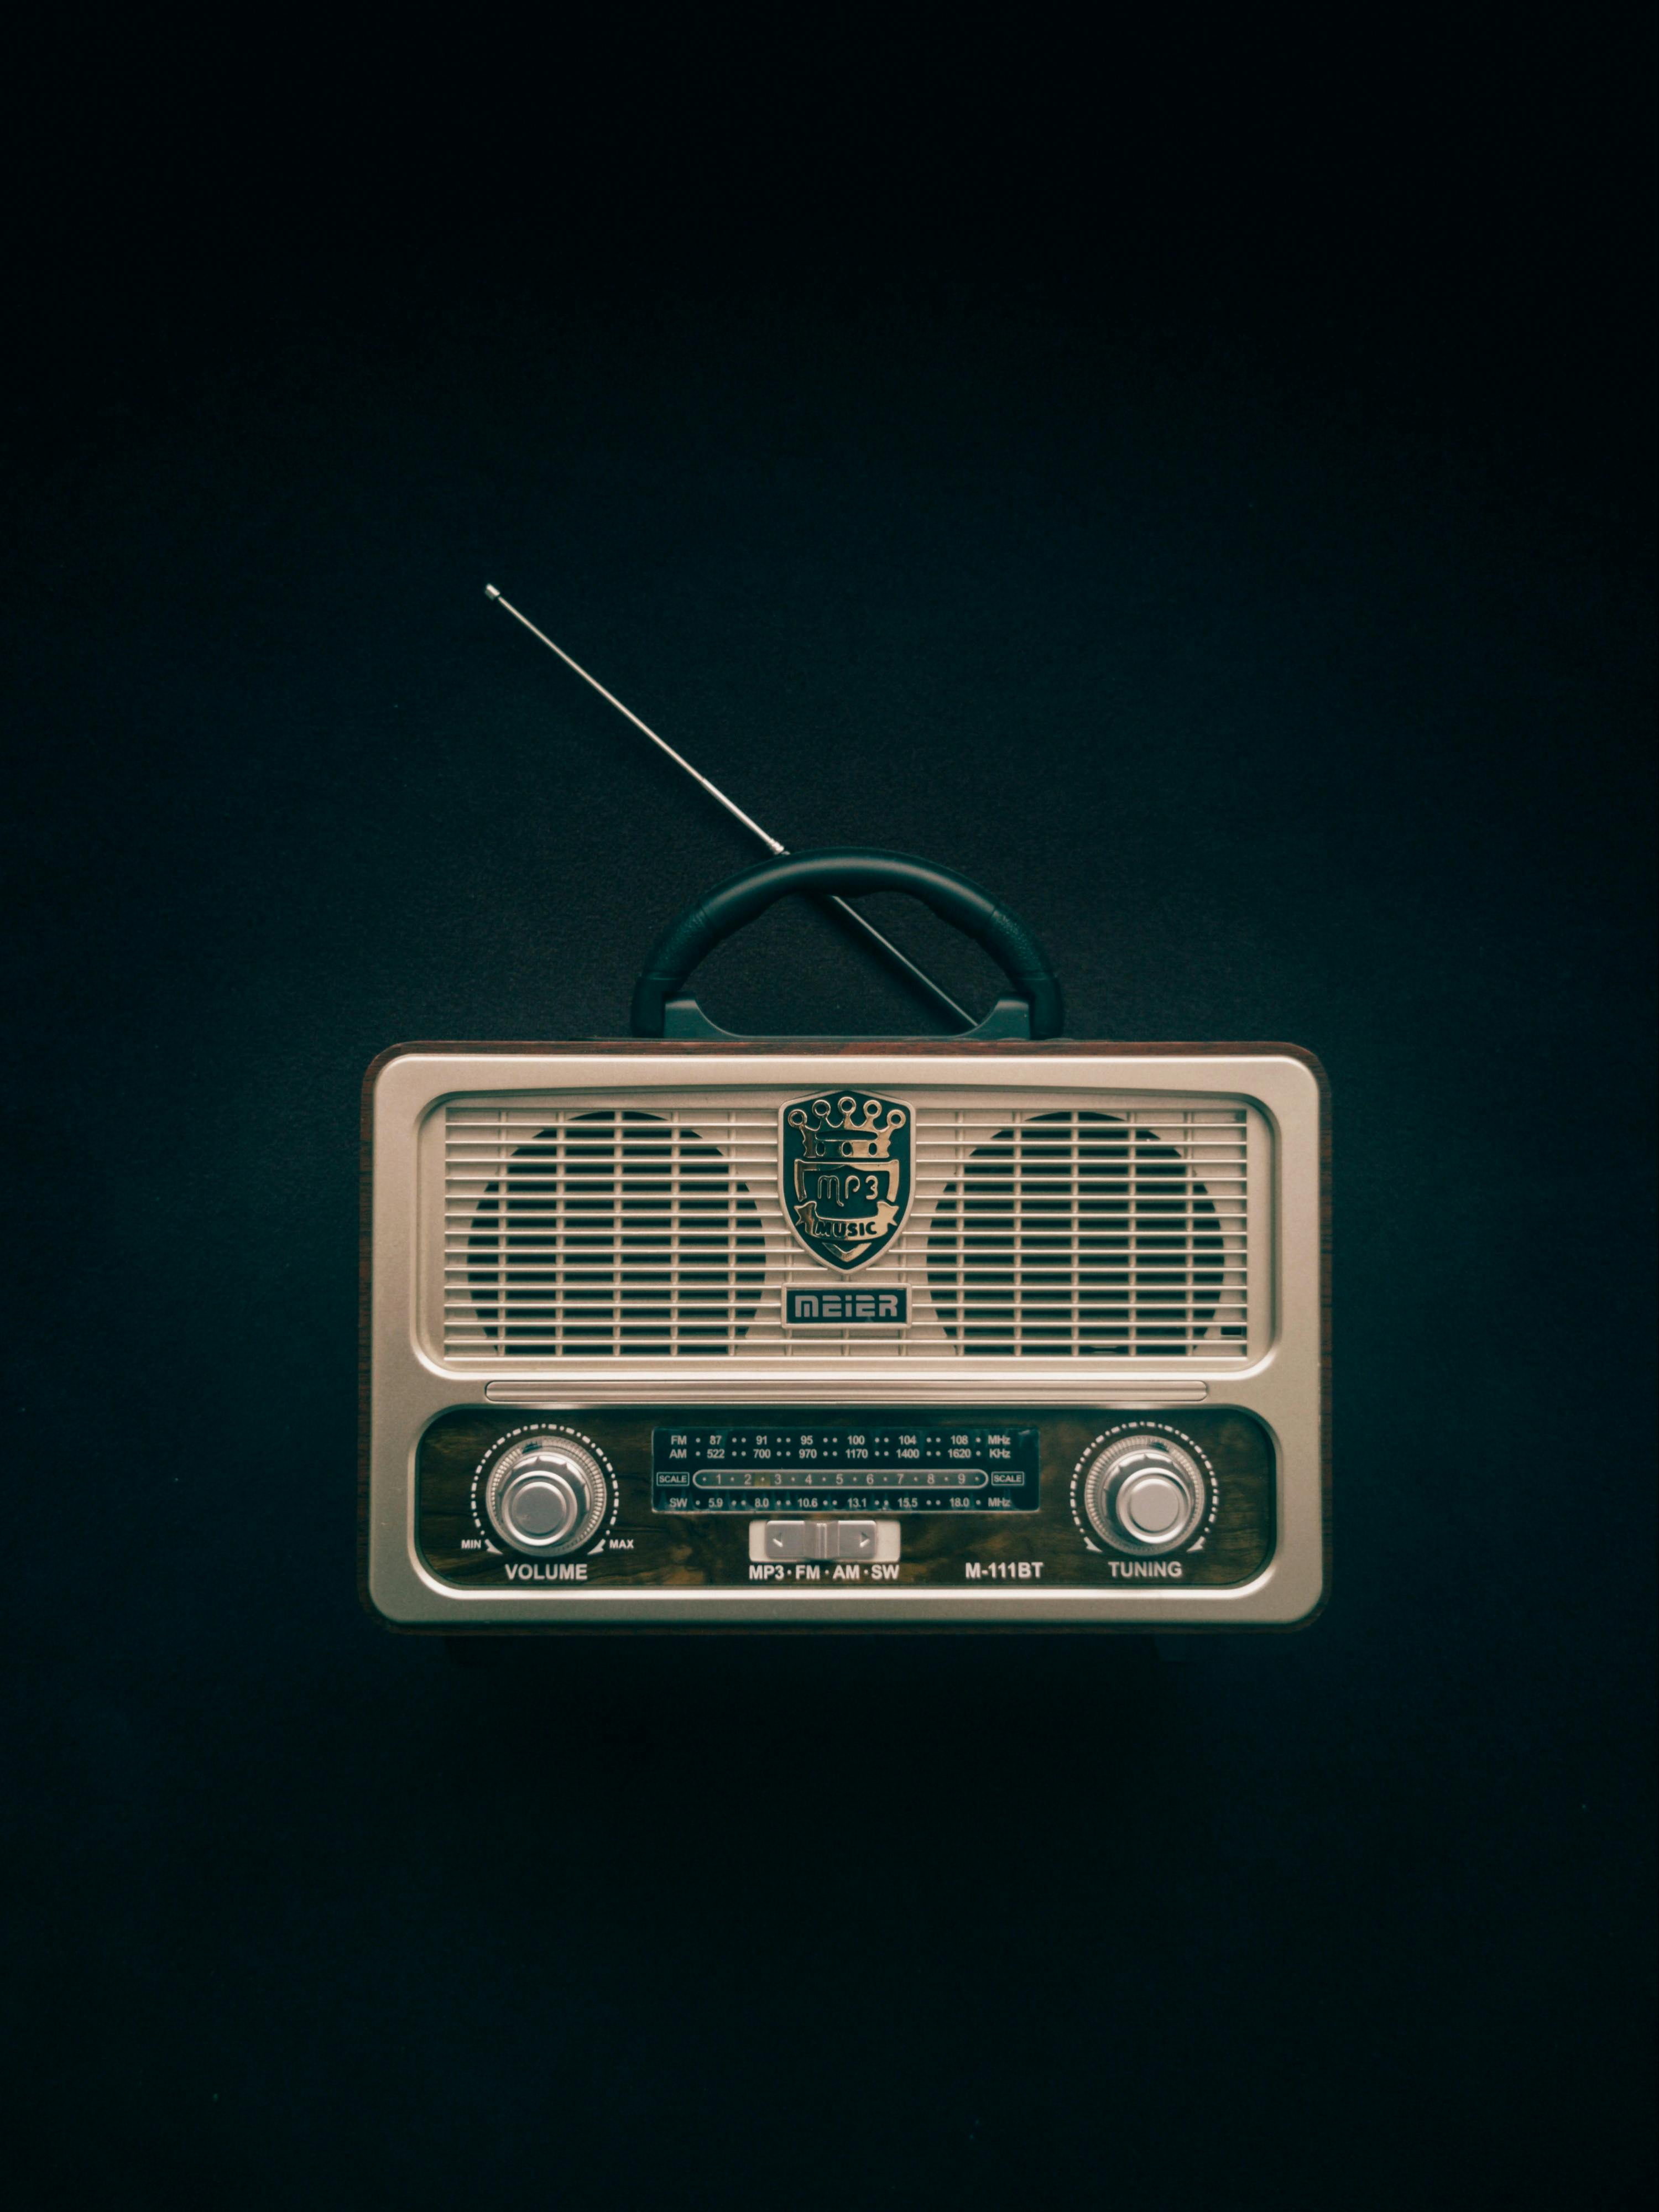 Vintage Radio Player on Black Background · Free Stock Photo